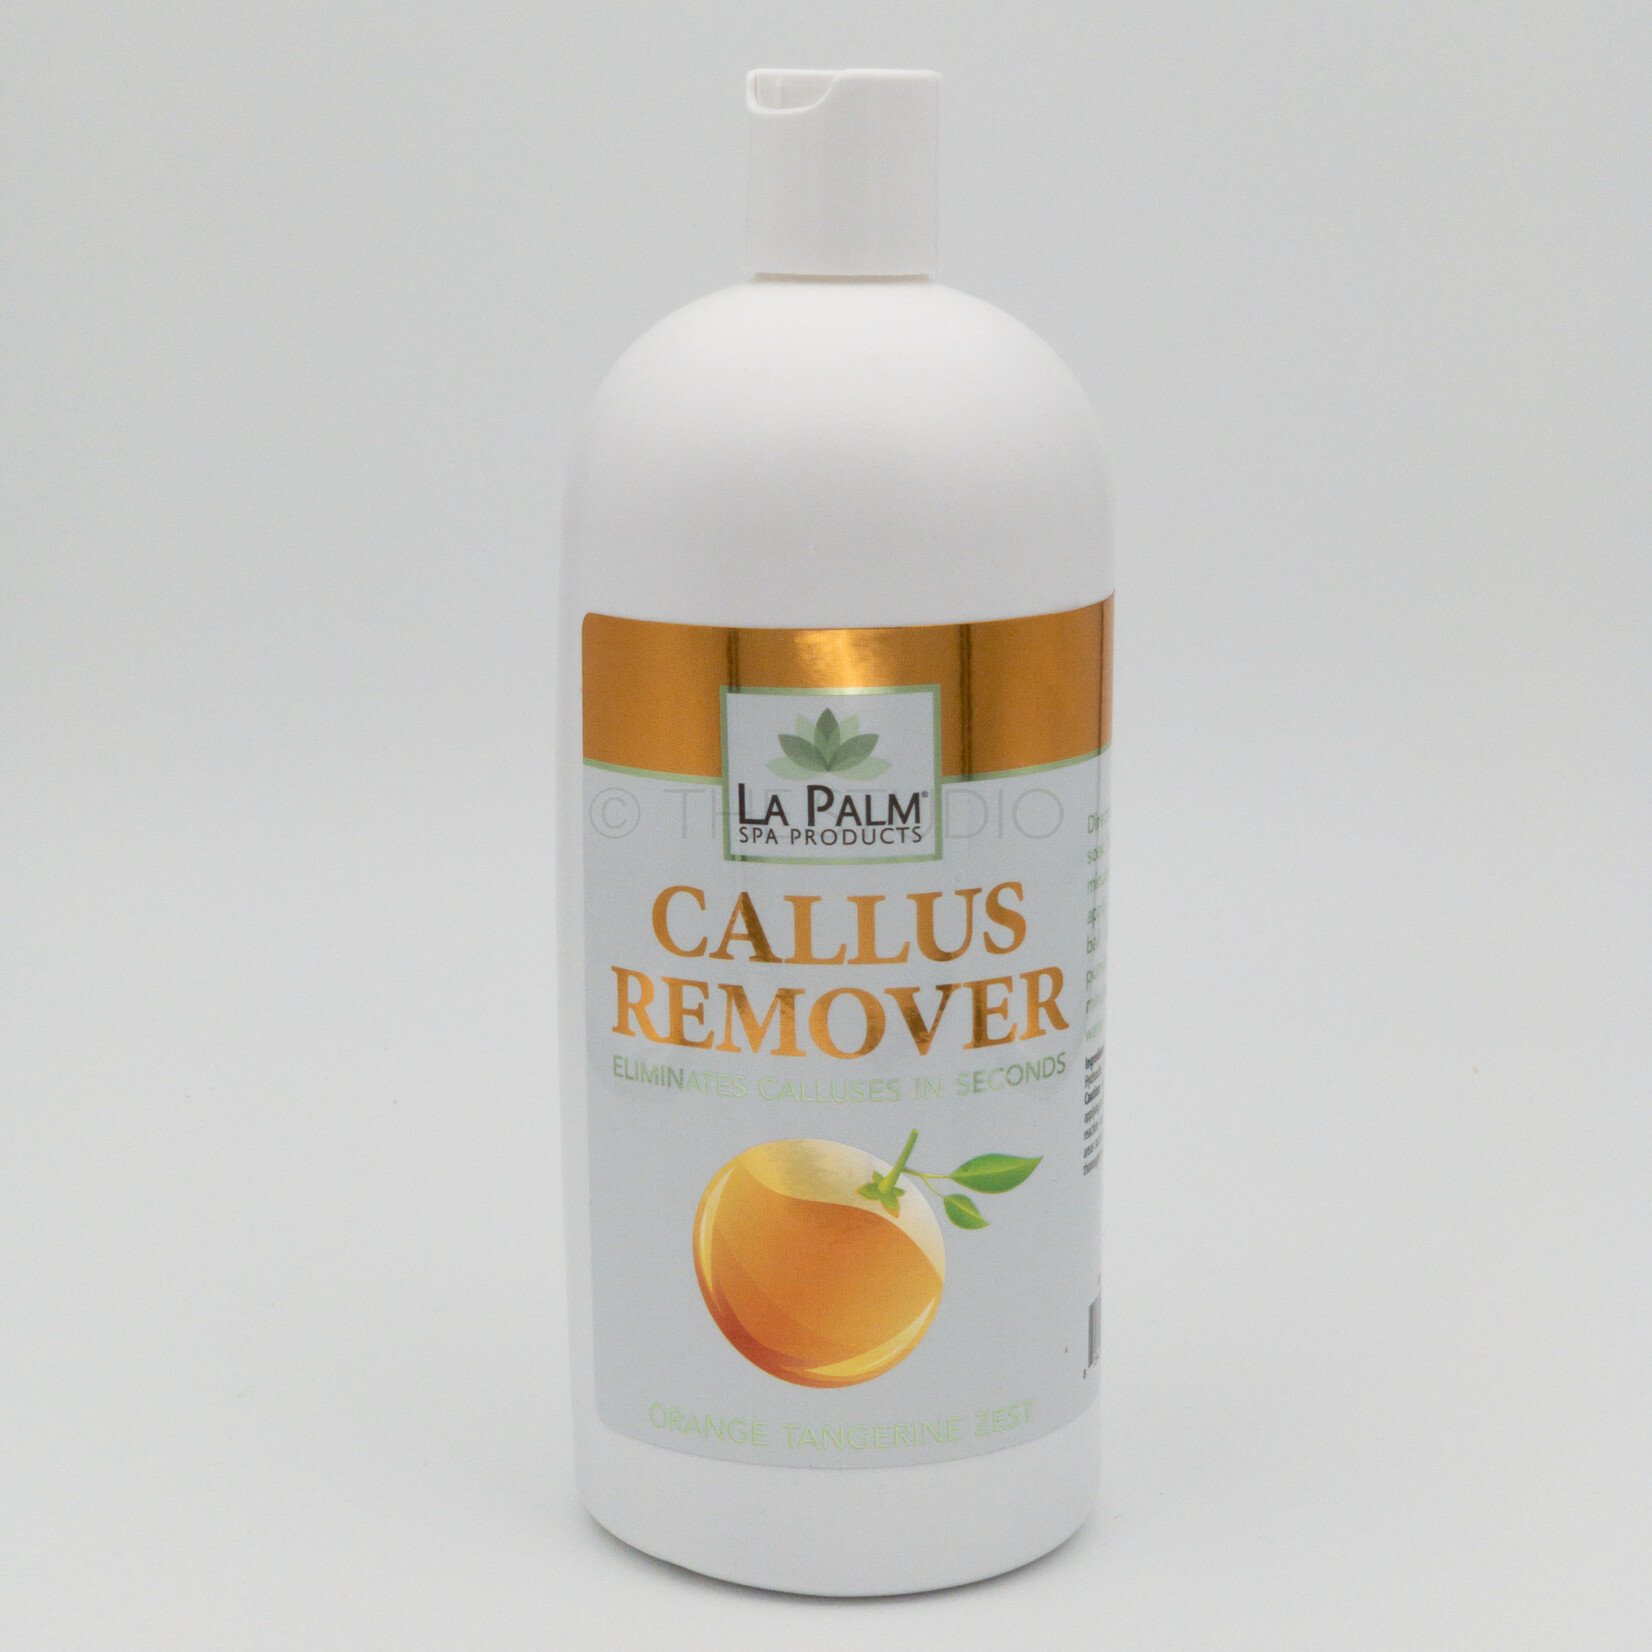 LA PALM La Palm - Callus Remover - 32 oz - Orange Tangerine Zest